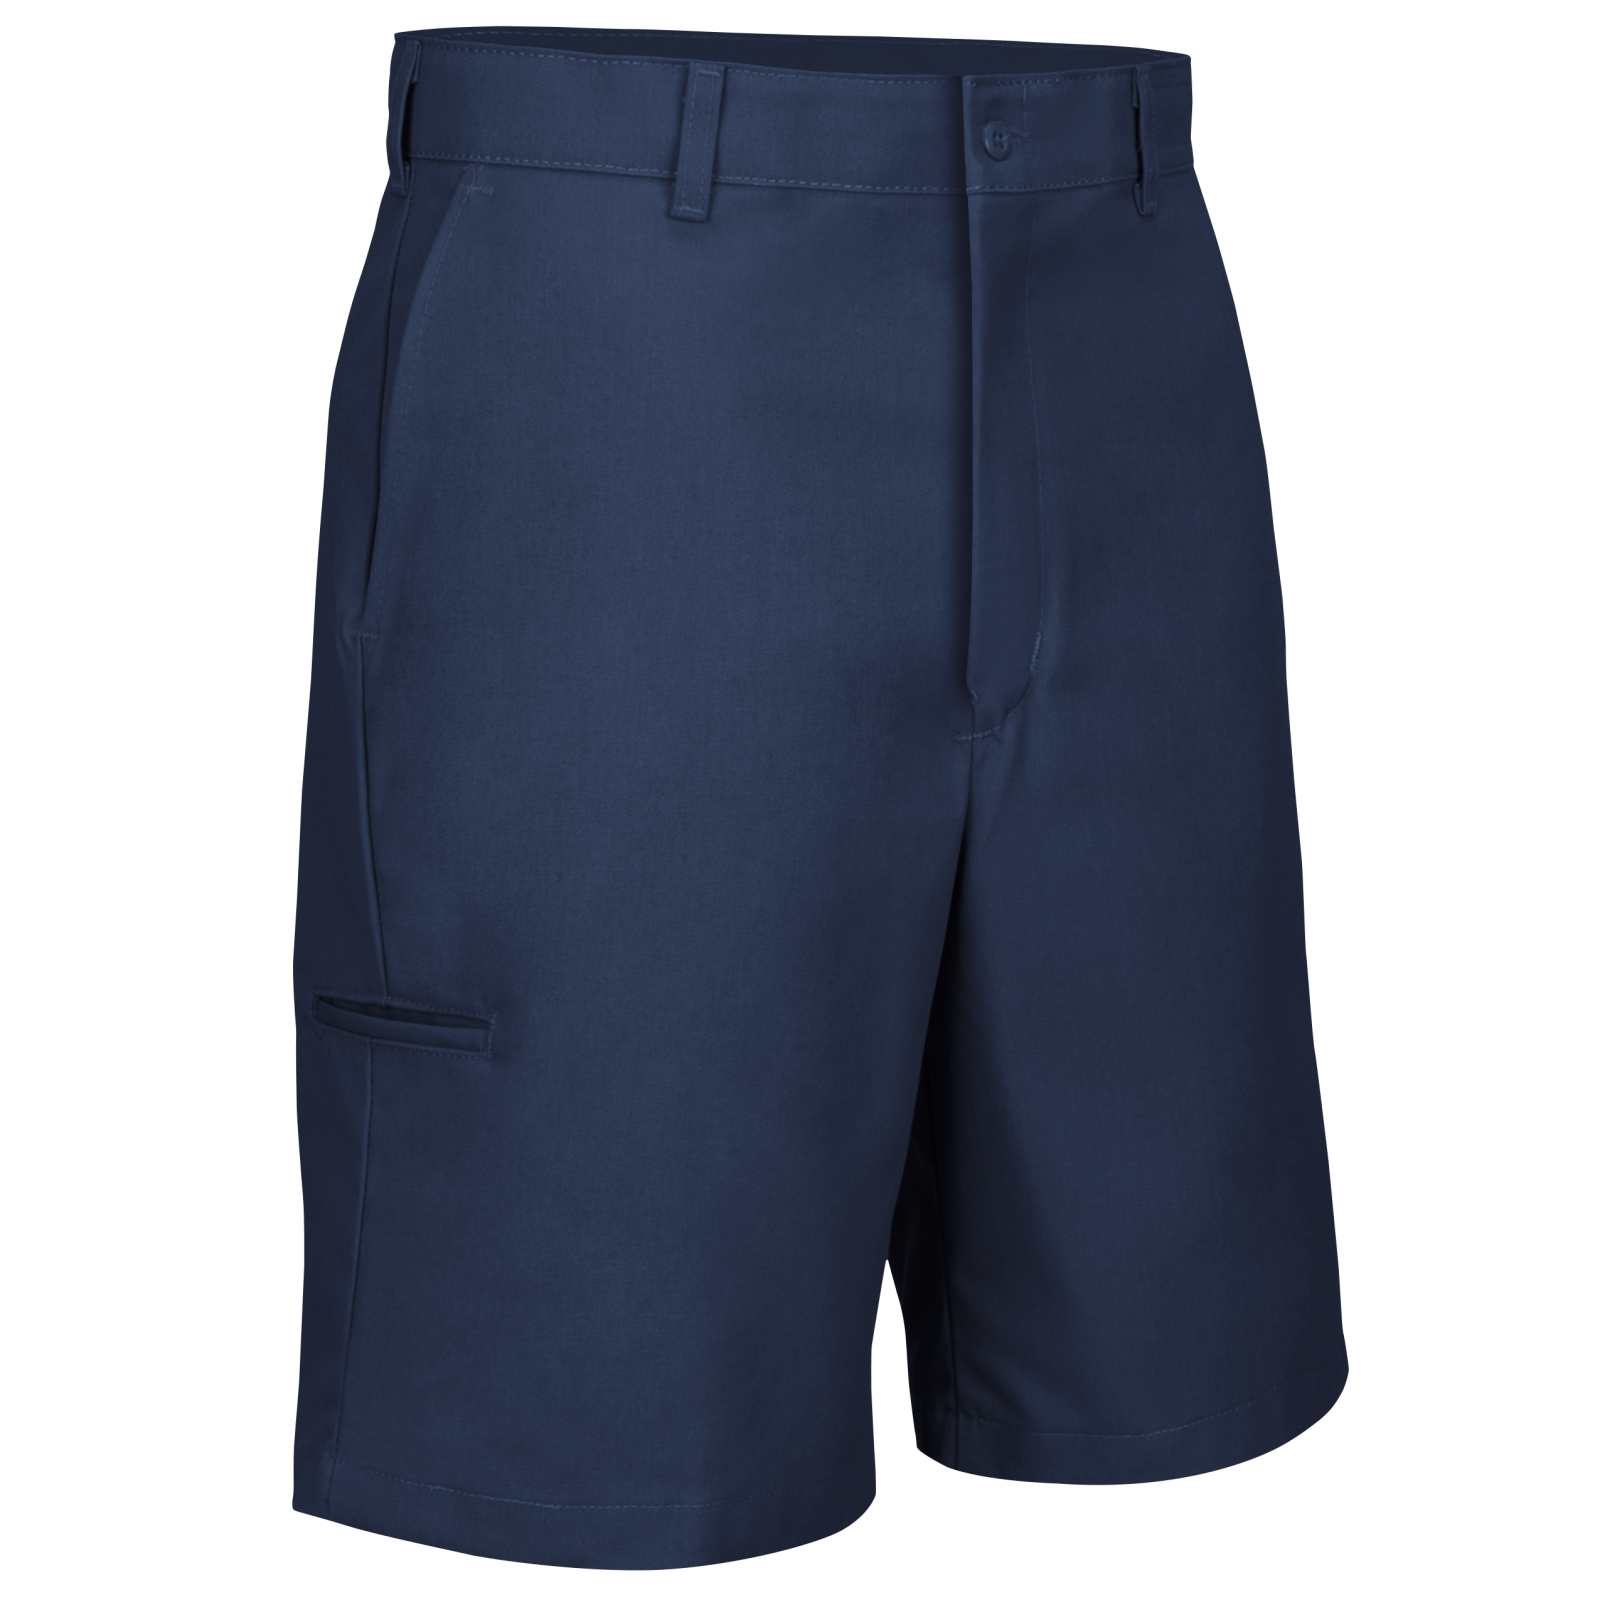 Men's Red Kap Workwear Uniform Cell Phone Pocket Shorts Size 34 PT4C Navy 